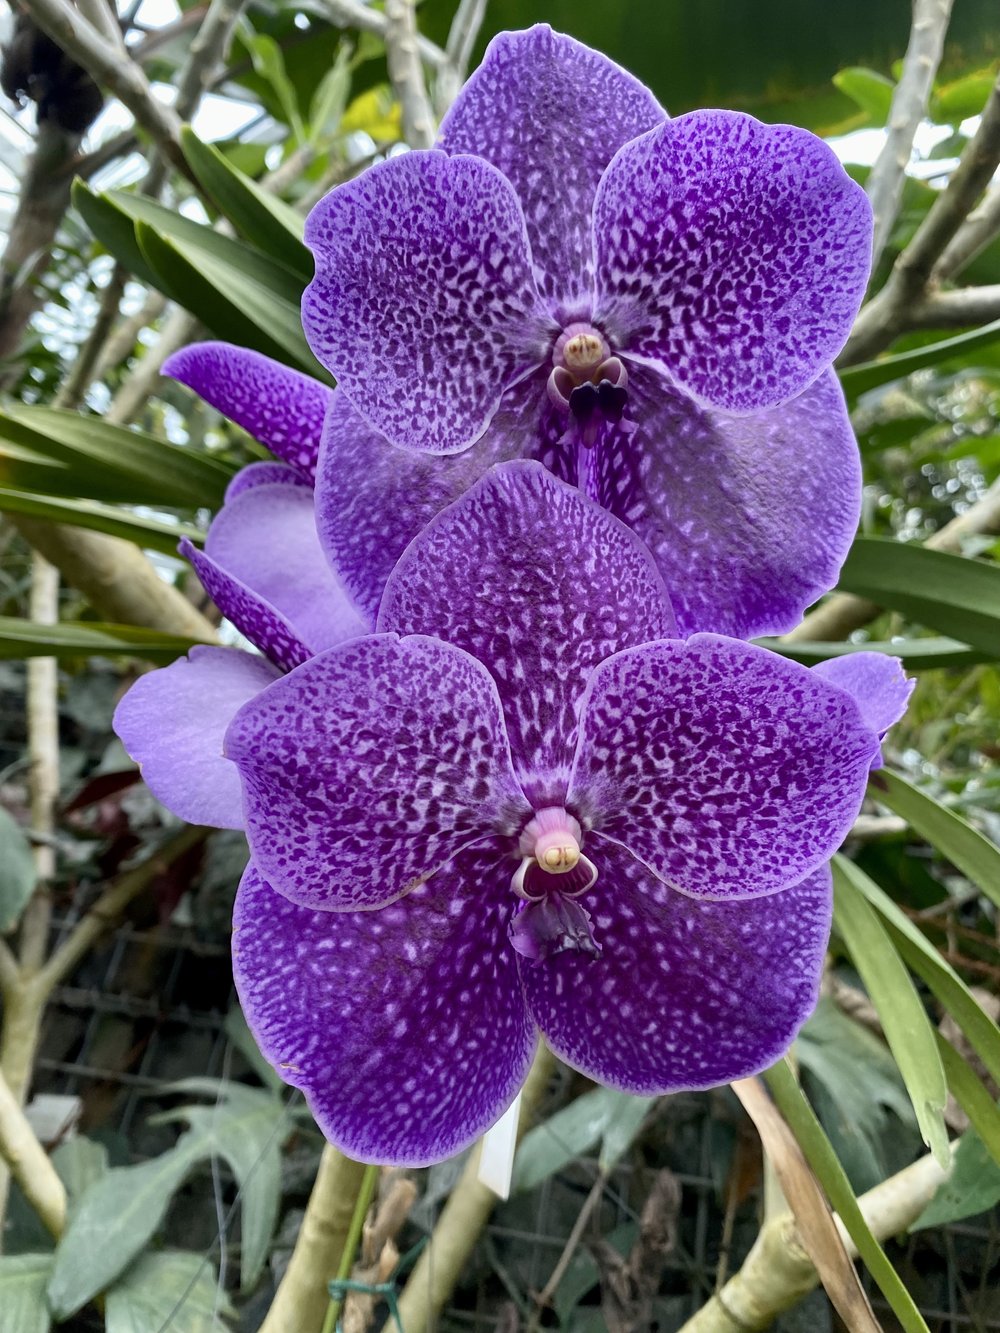 Scavenger Hunt Gardens Greenhouse Large Purple Orchids.jpg